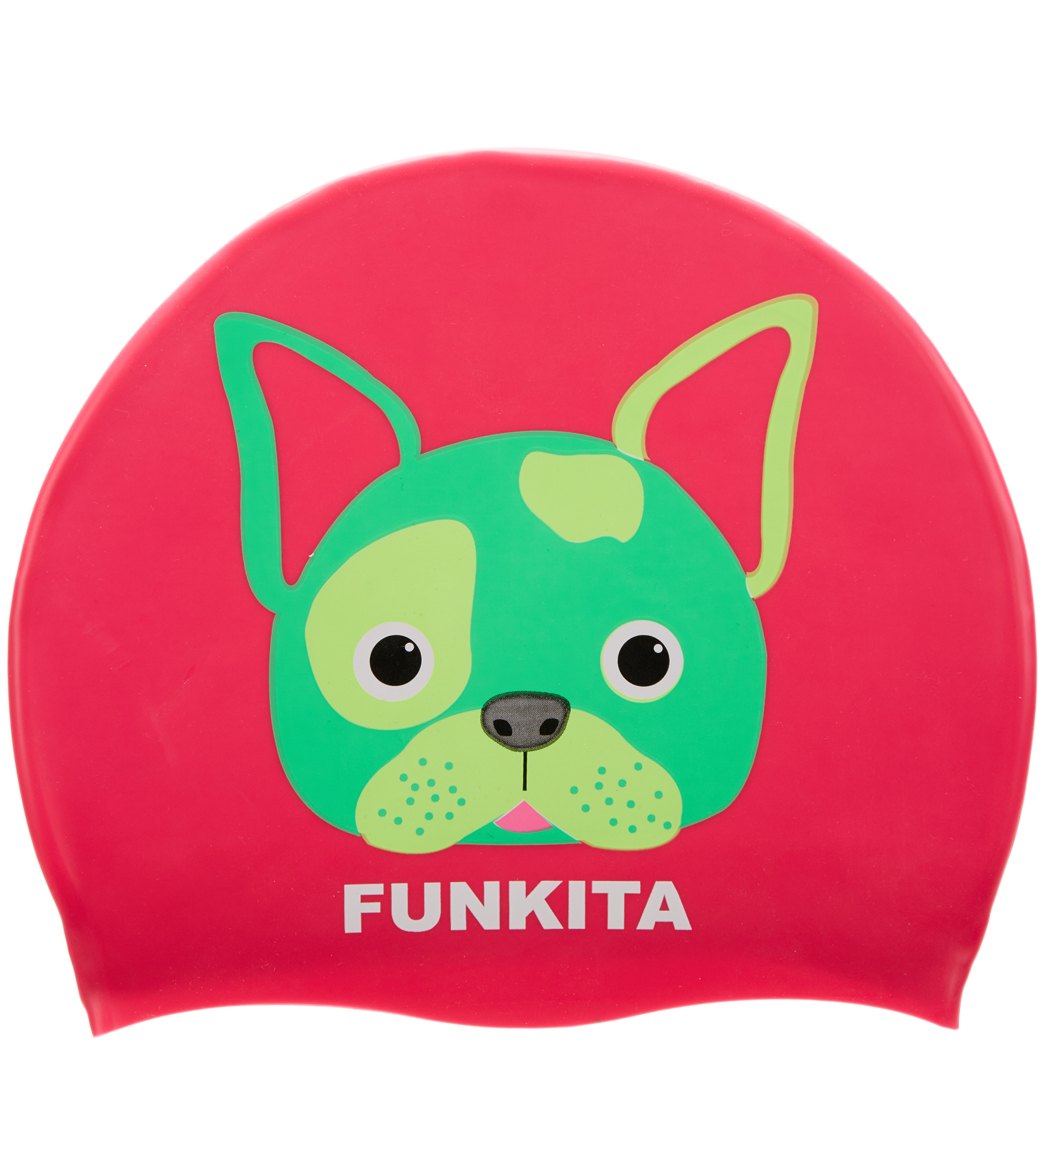 Funkita Hot Diggity Silicone Swimming Cap at SwimOutlet.com